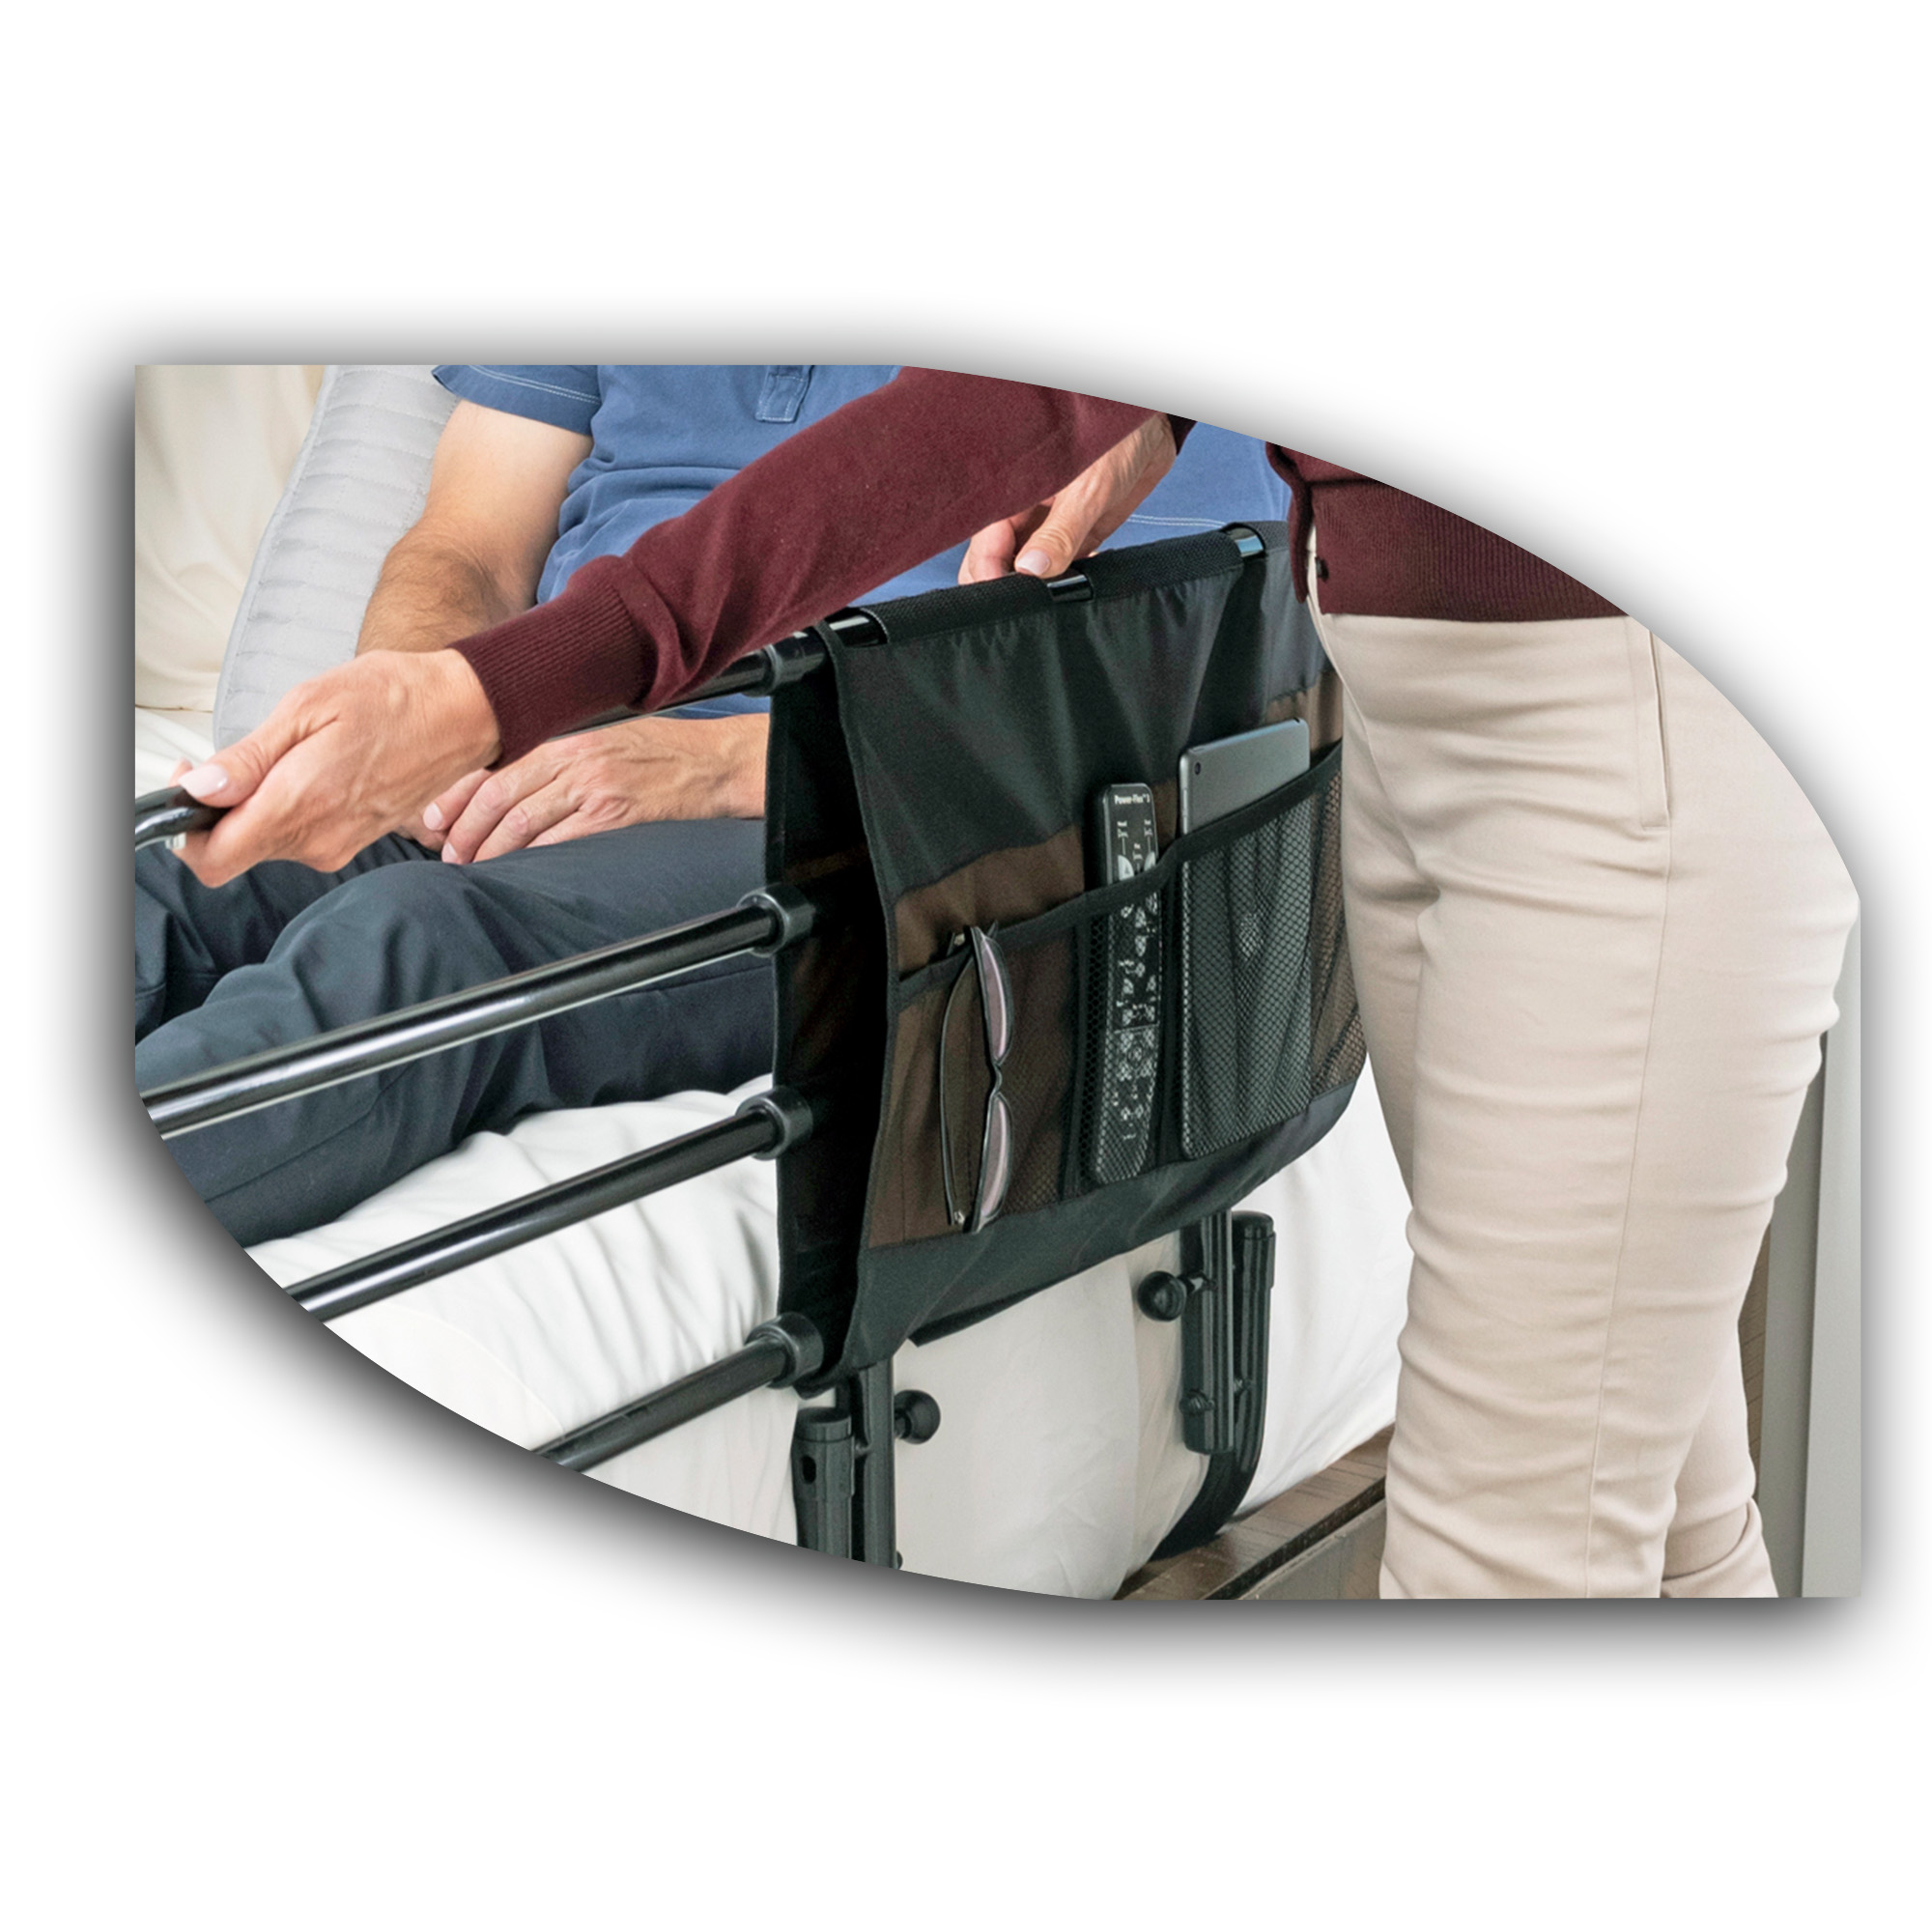 stander ez adjust bed rail for elderly fall prevention singapore 